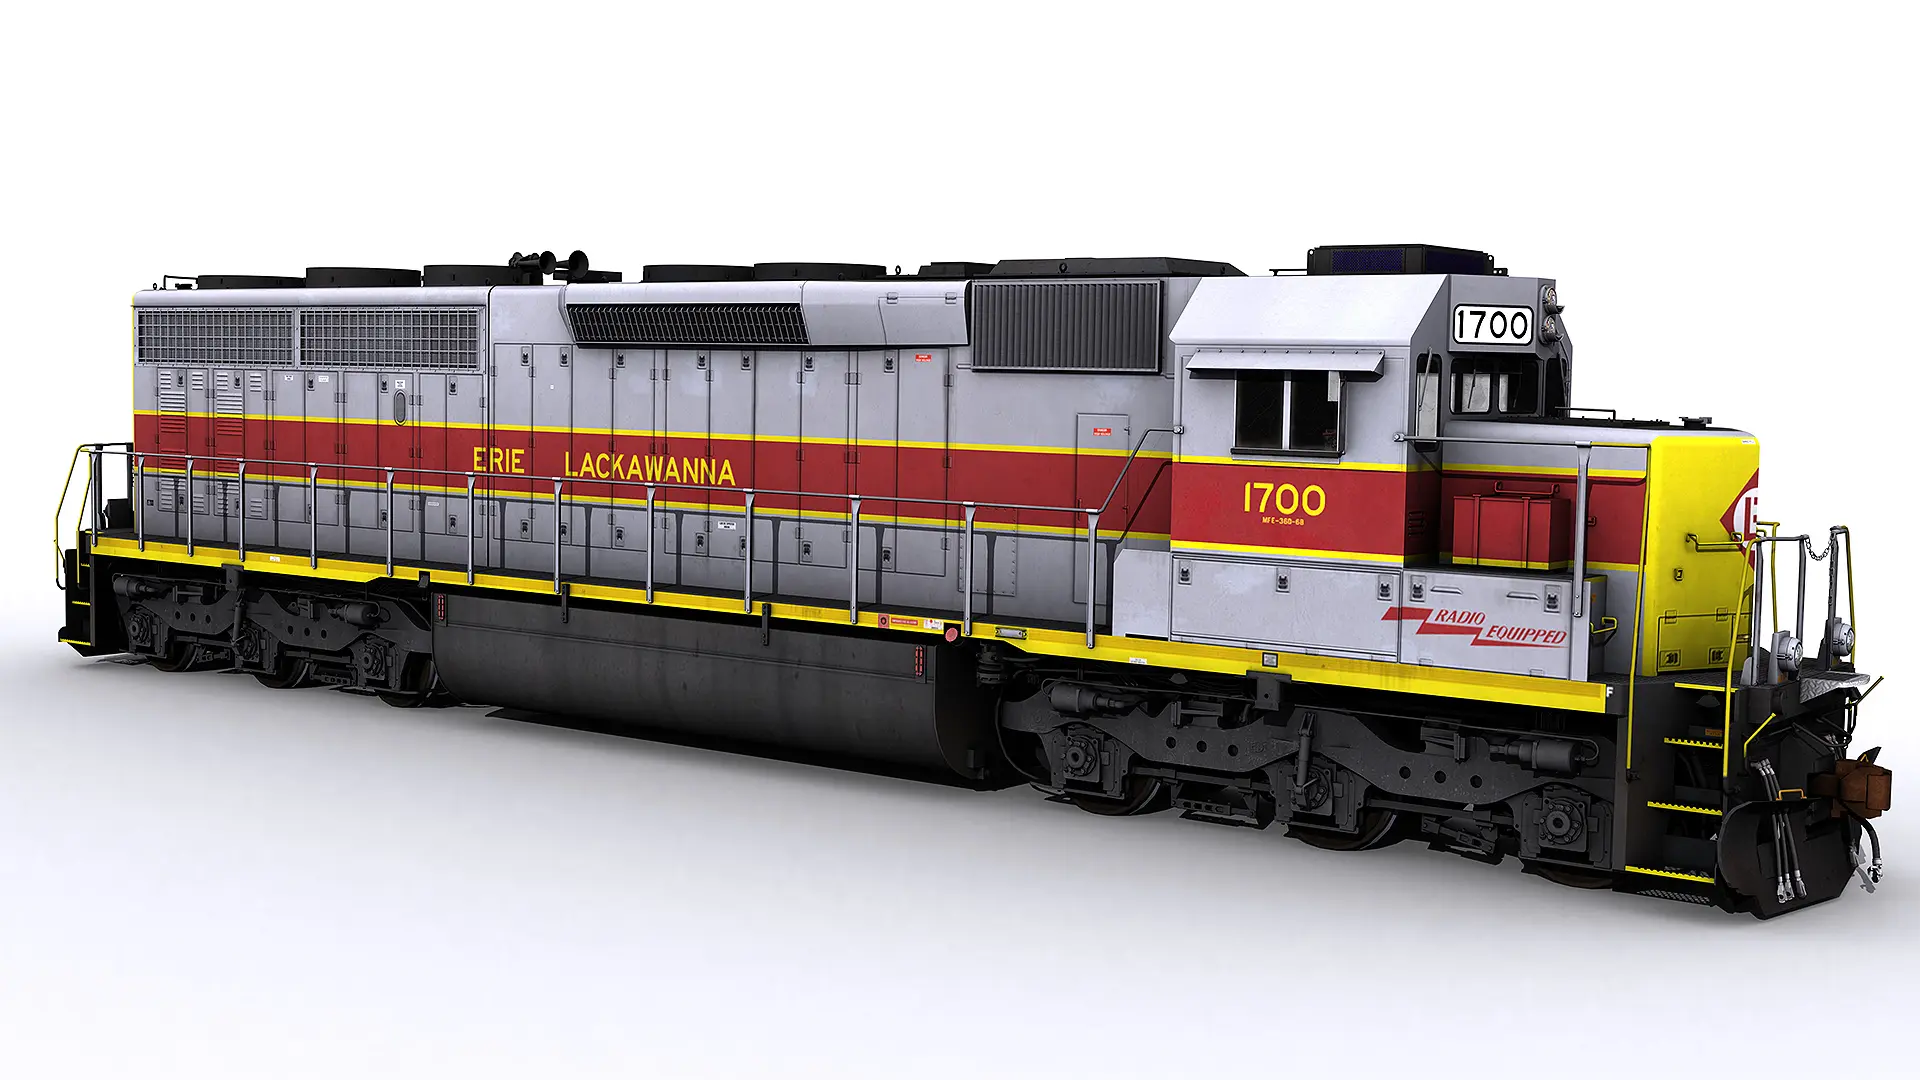 A powerful rail engine belongs to RRMODS